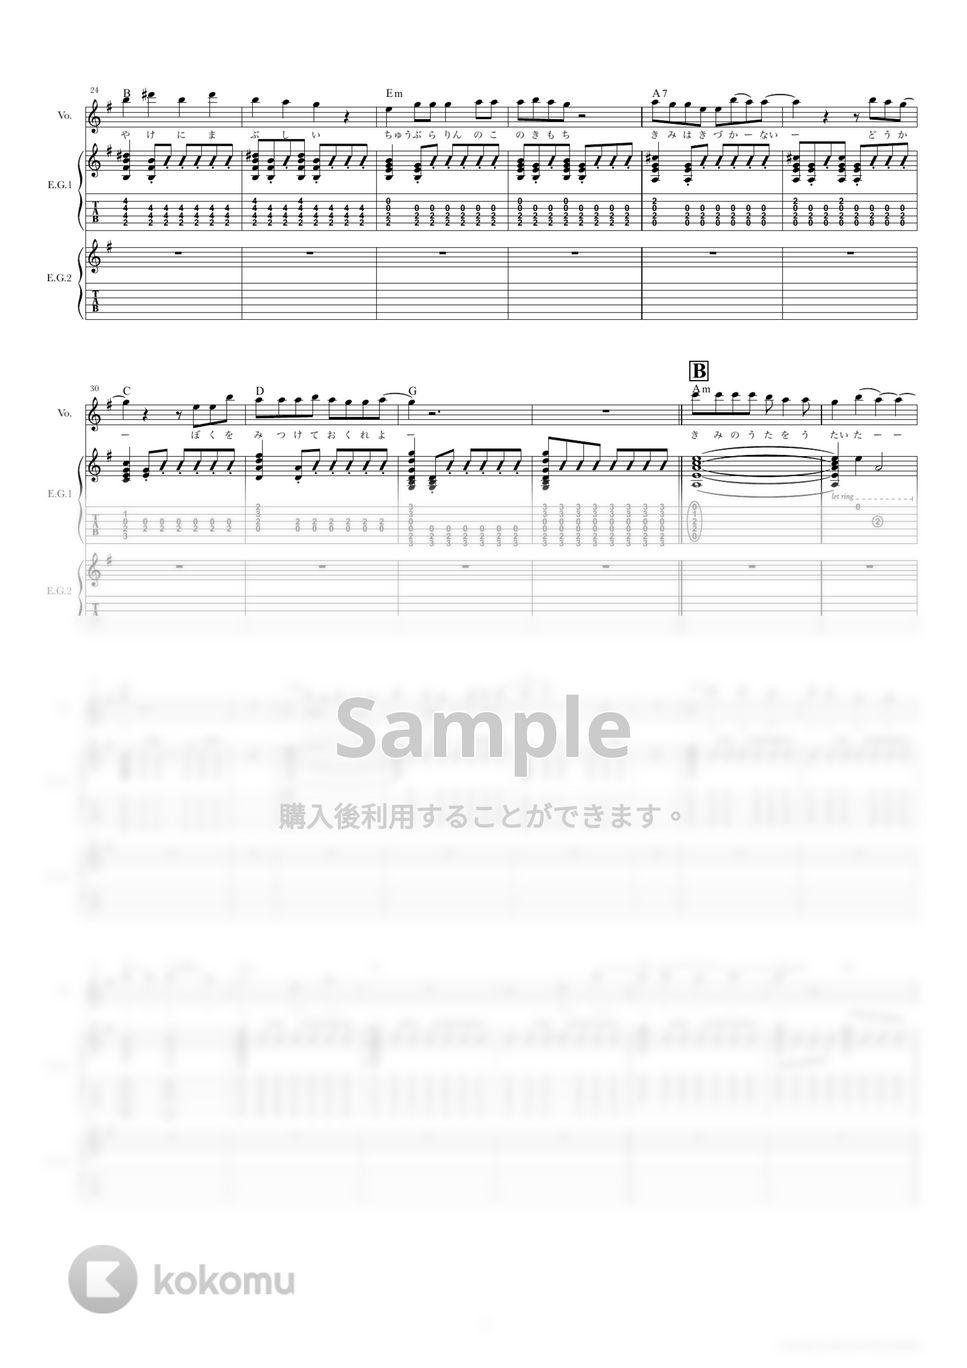 Hump Back - 恋をしよう (ギタースコア・歌詞・コード付き) by TRIAD GUITAR SCHOOL